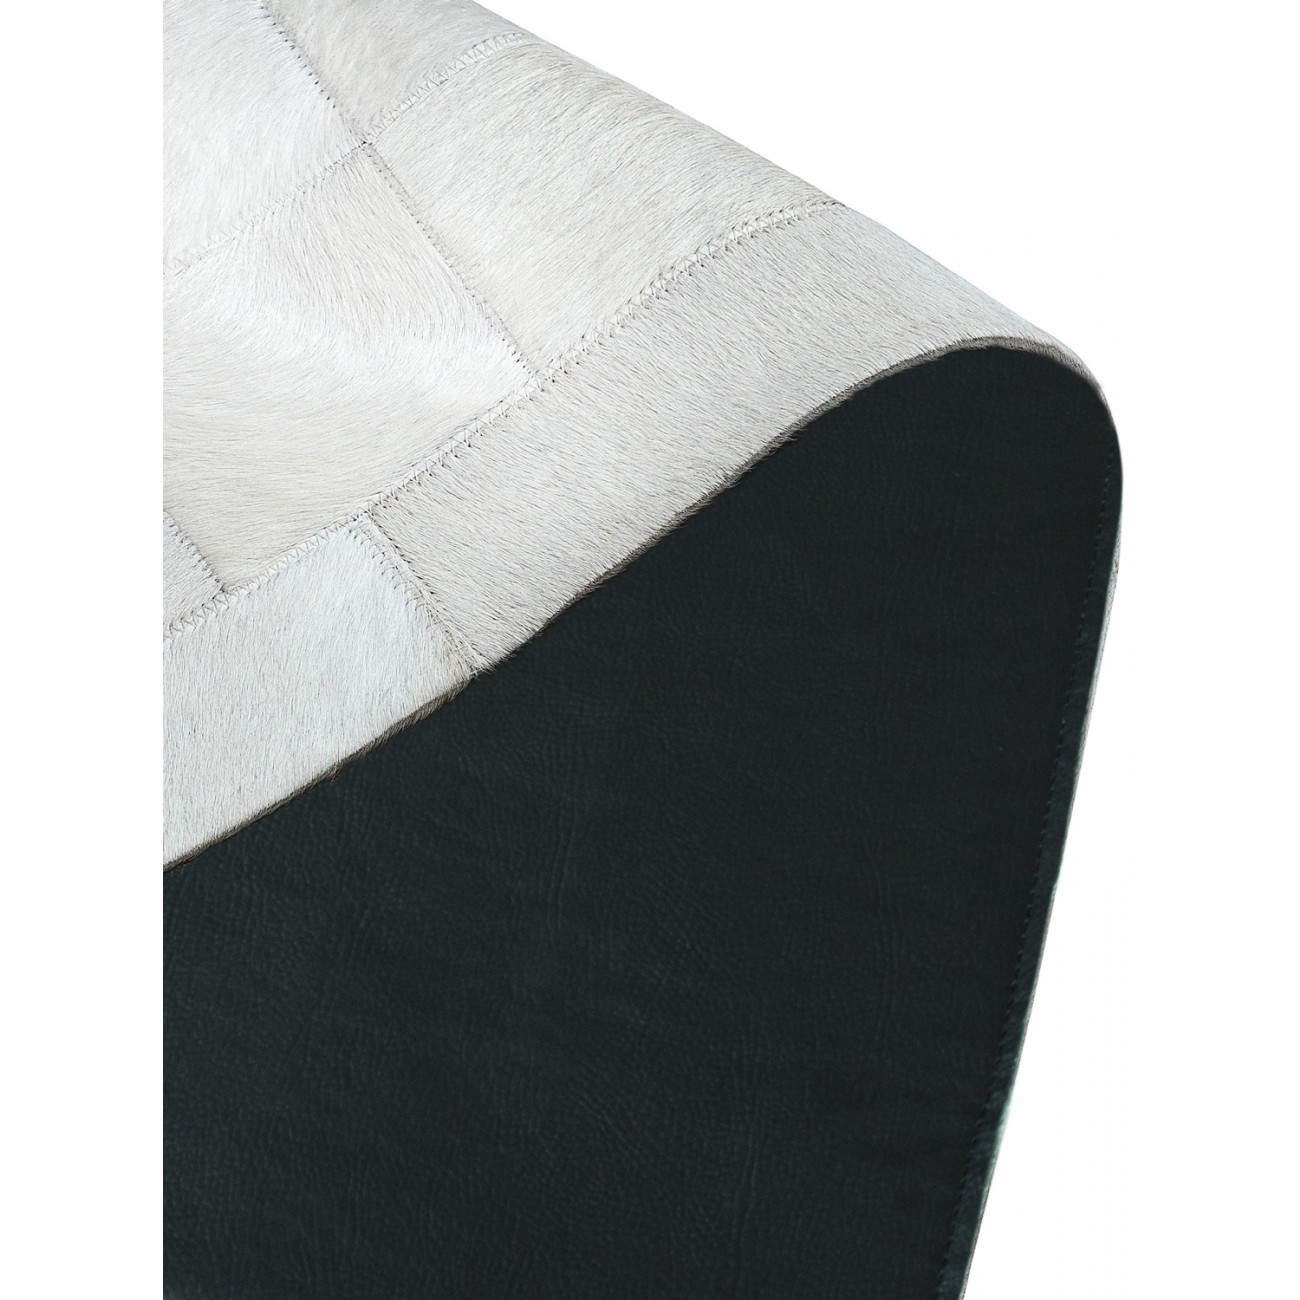 Tapete Couro Branco com Borda (10x10) Redondo - Personalizável